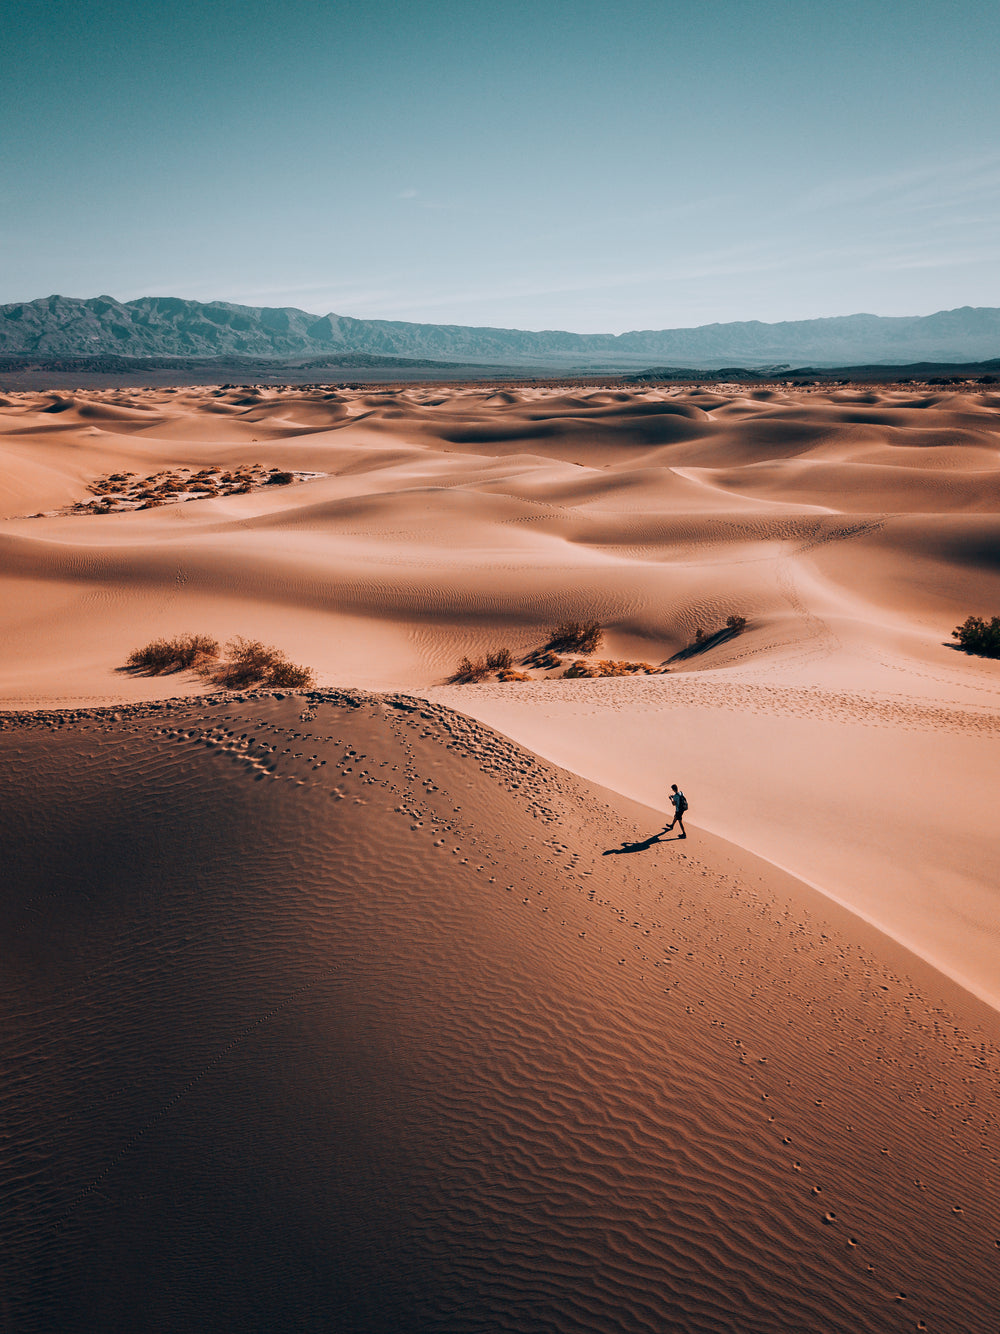 a lone wanderer in a desert land